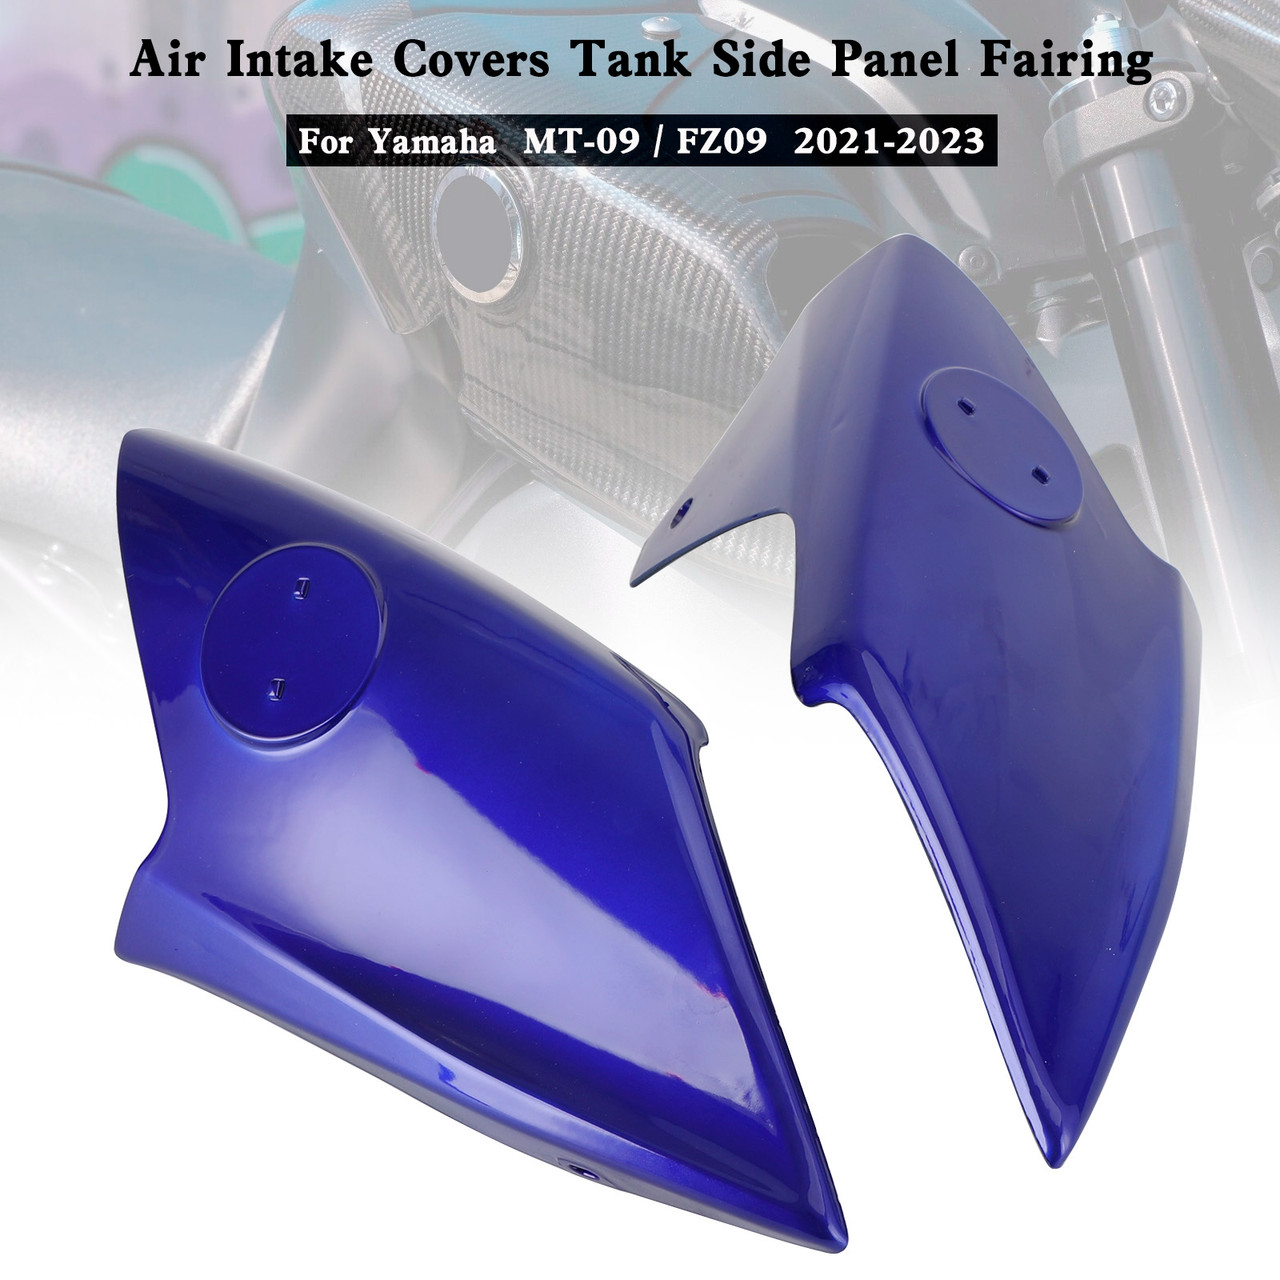 Air Intake Covers Tank Side Panel Fairing For Yamaha MT-09 FZ09 2021-2023 BLU